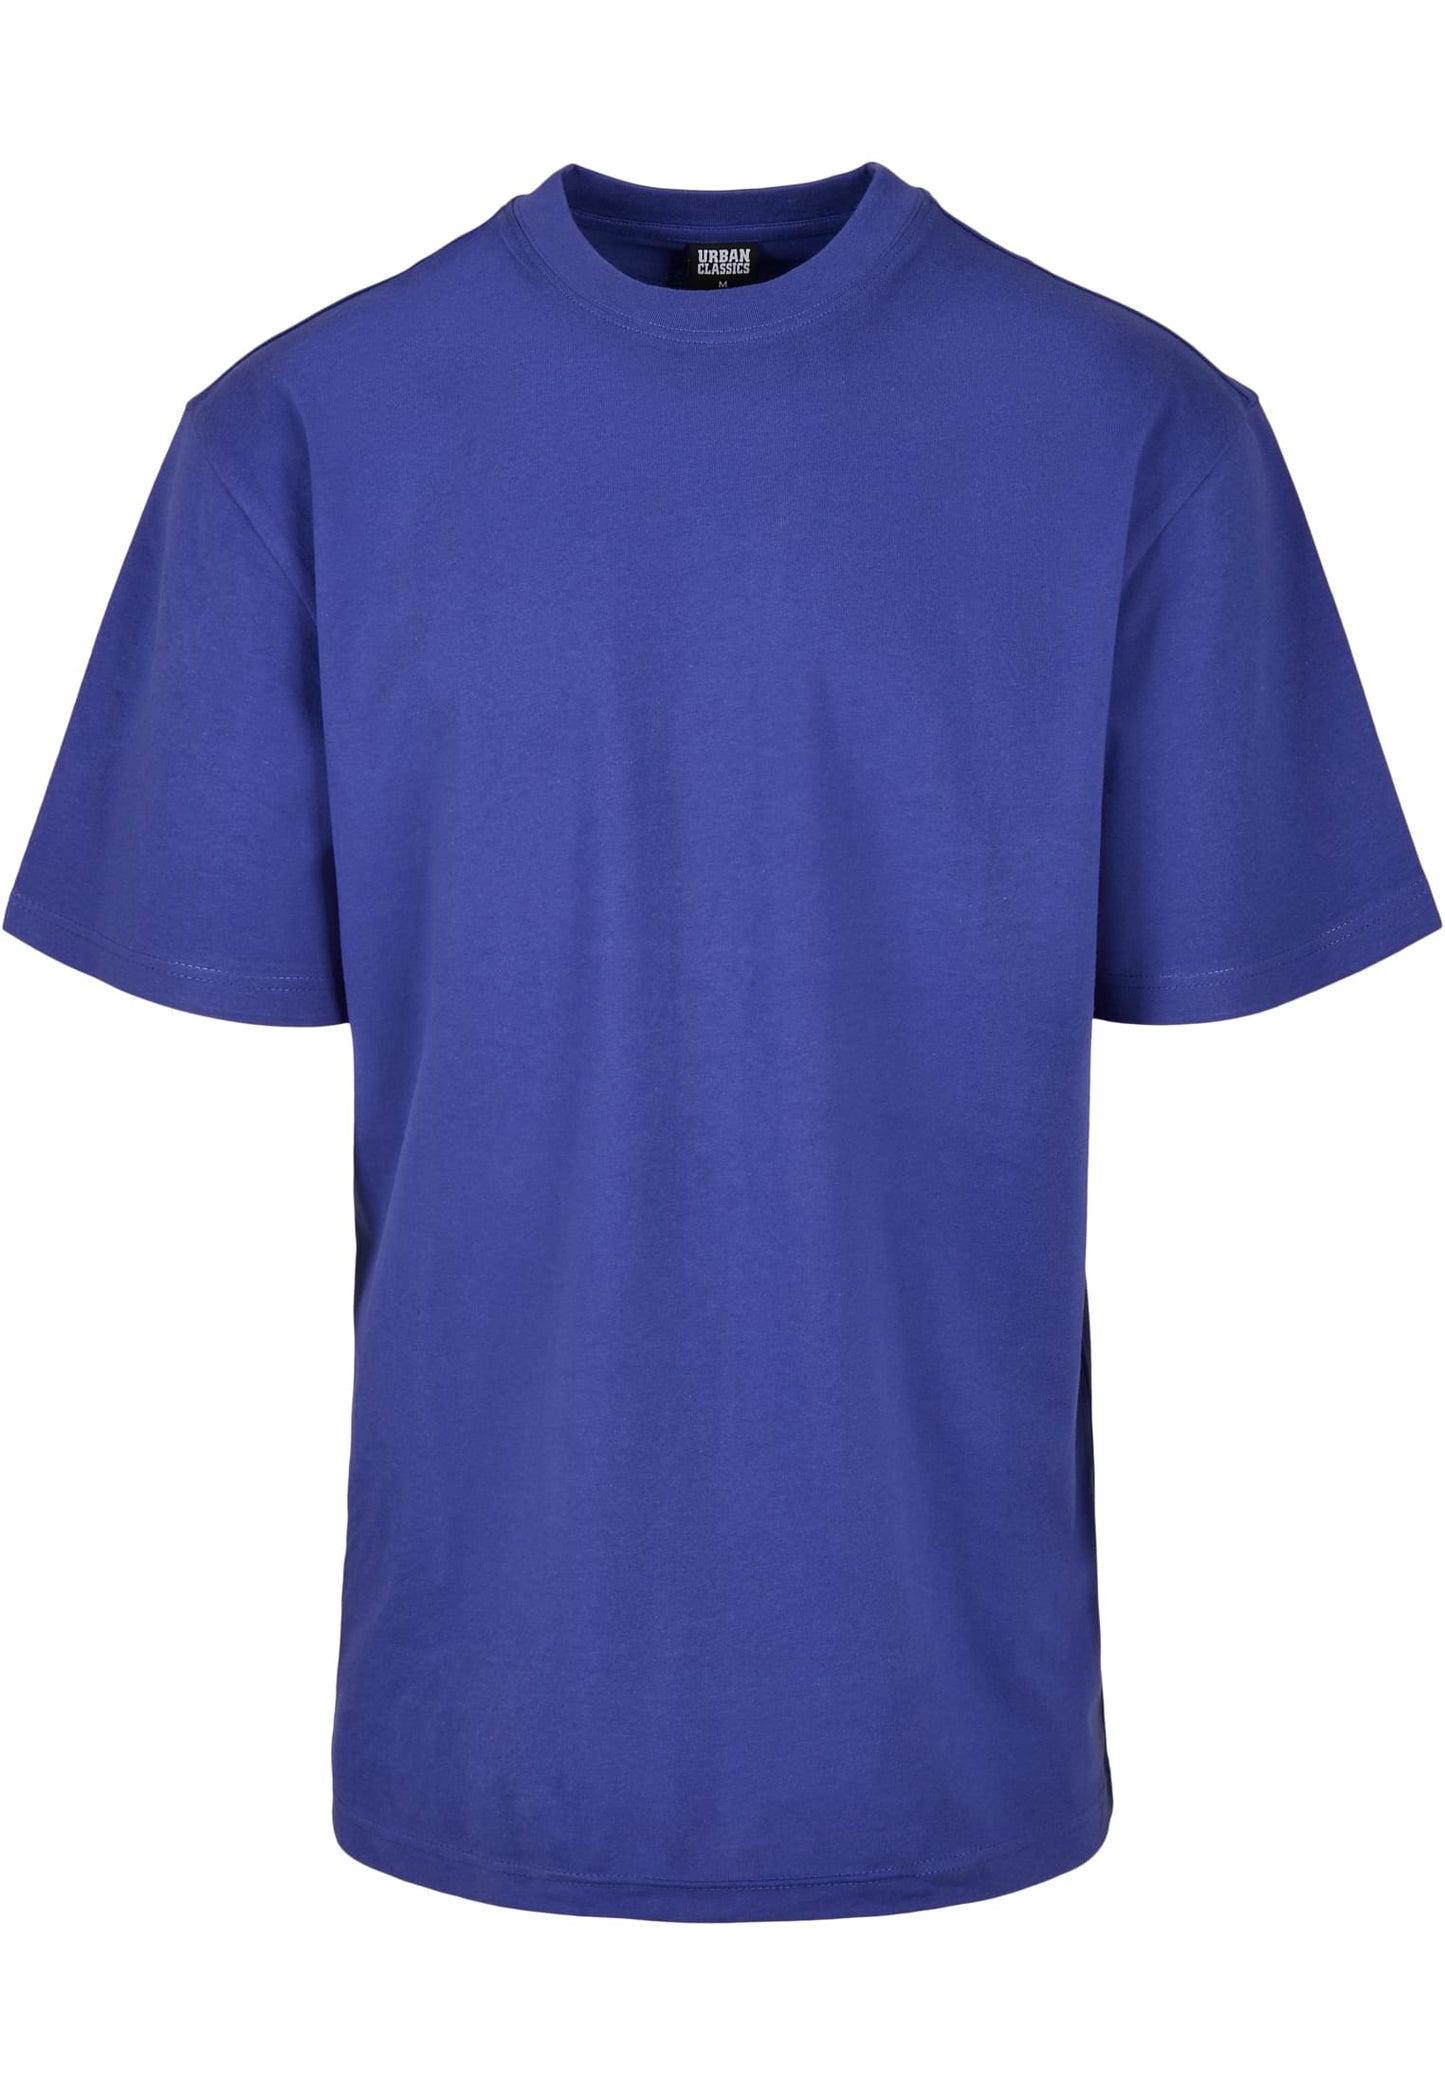 Urban Classics Tall T-Shirt Baggy / Loose Fit in bluepurple